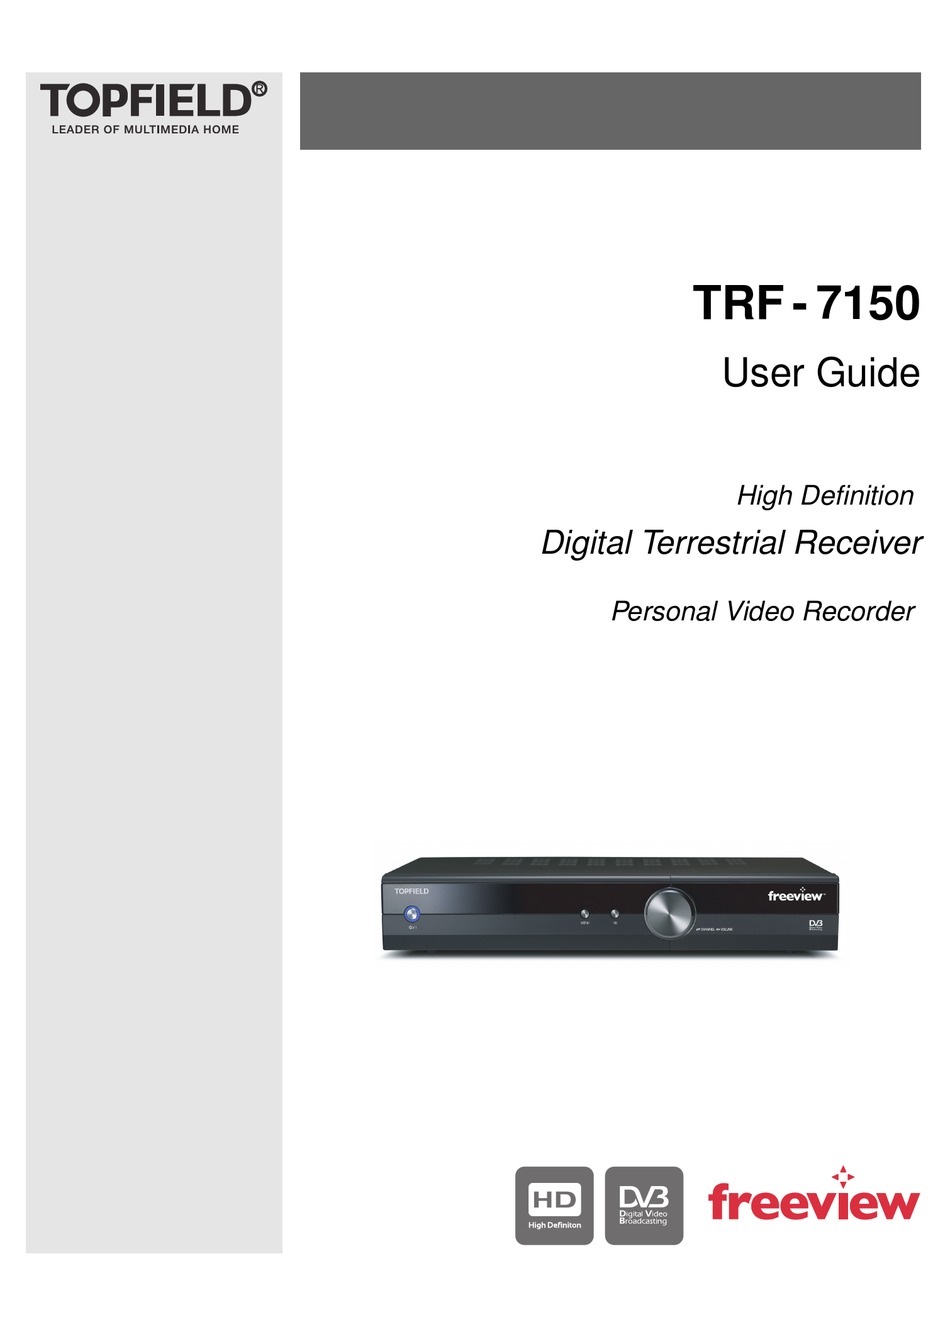 topfield trf 7160 firmware upgrade